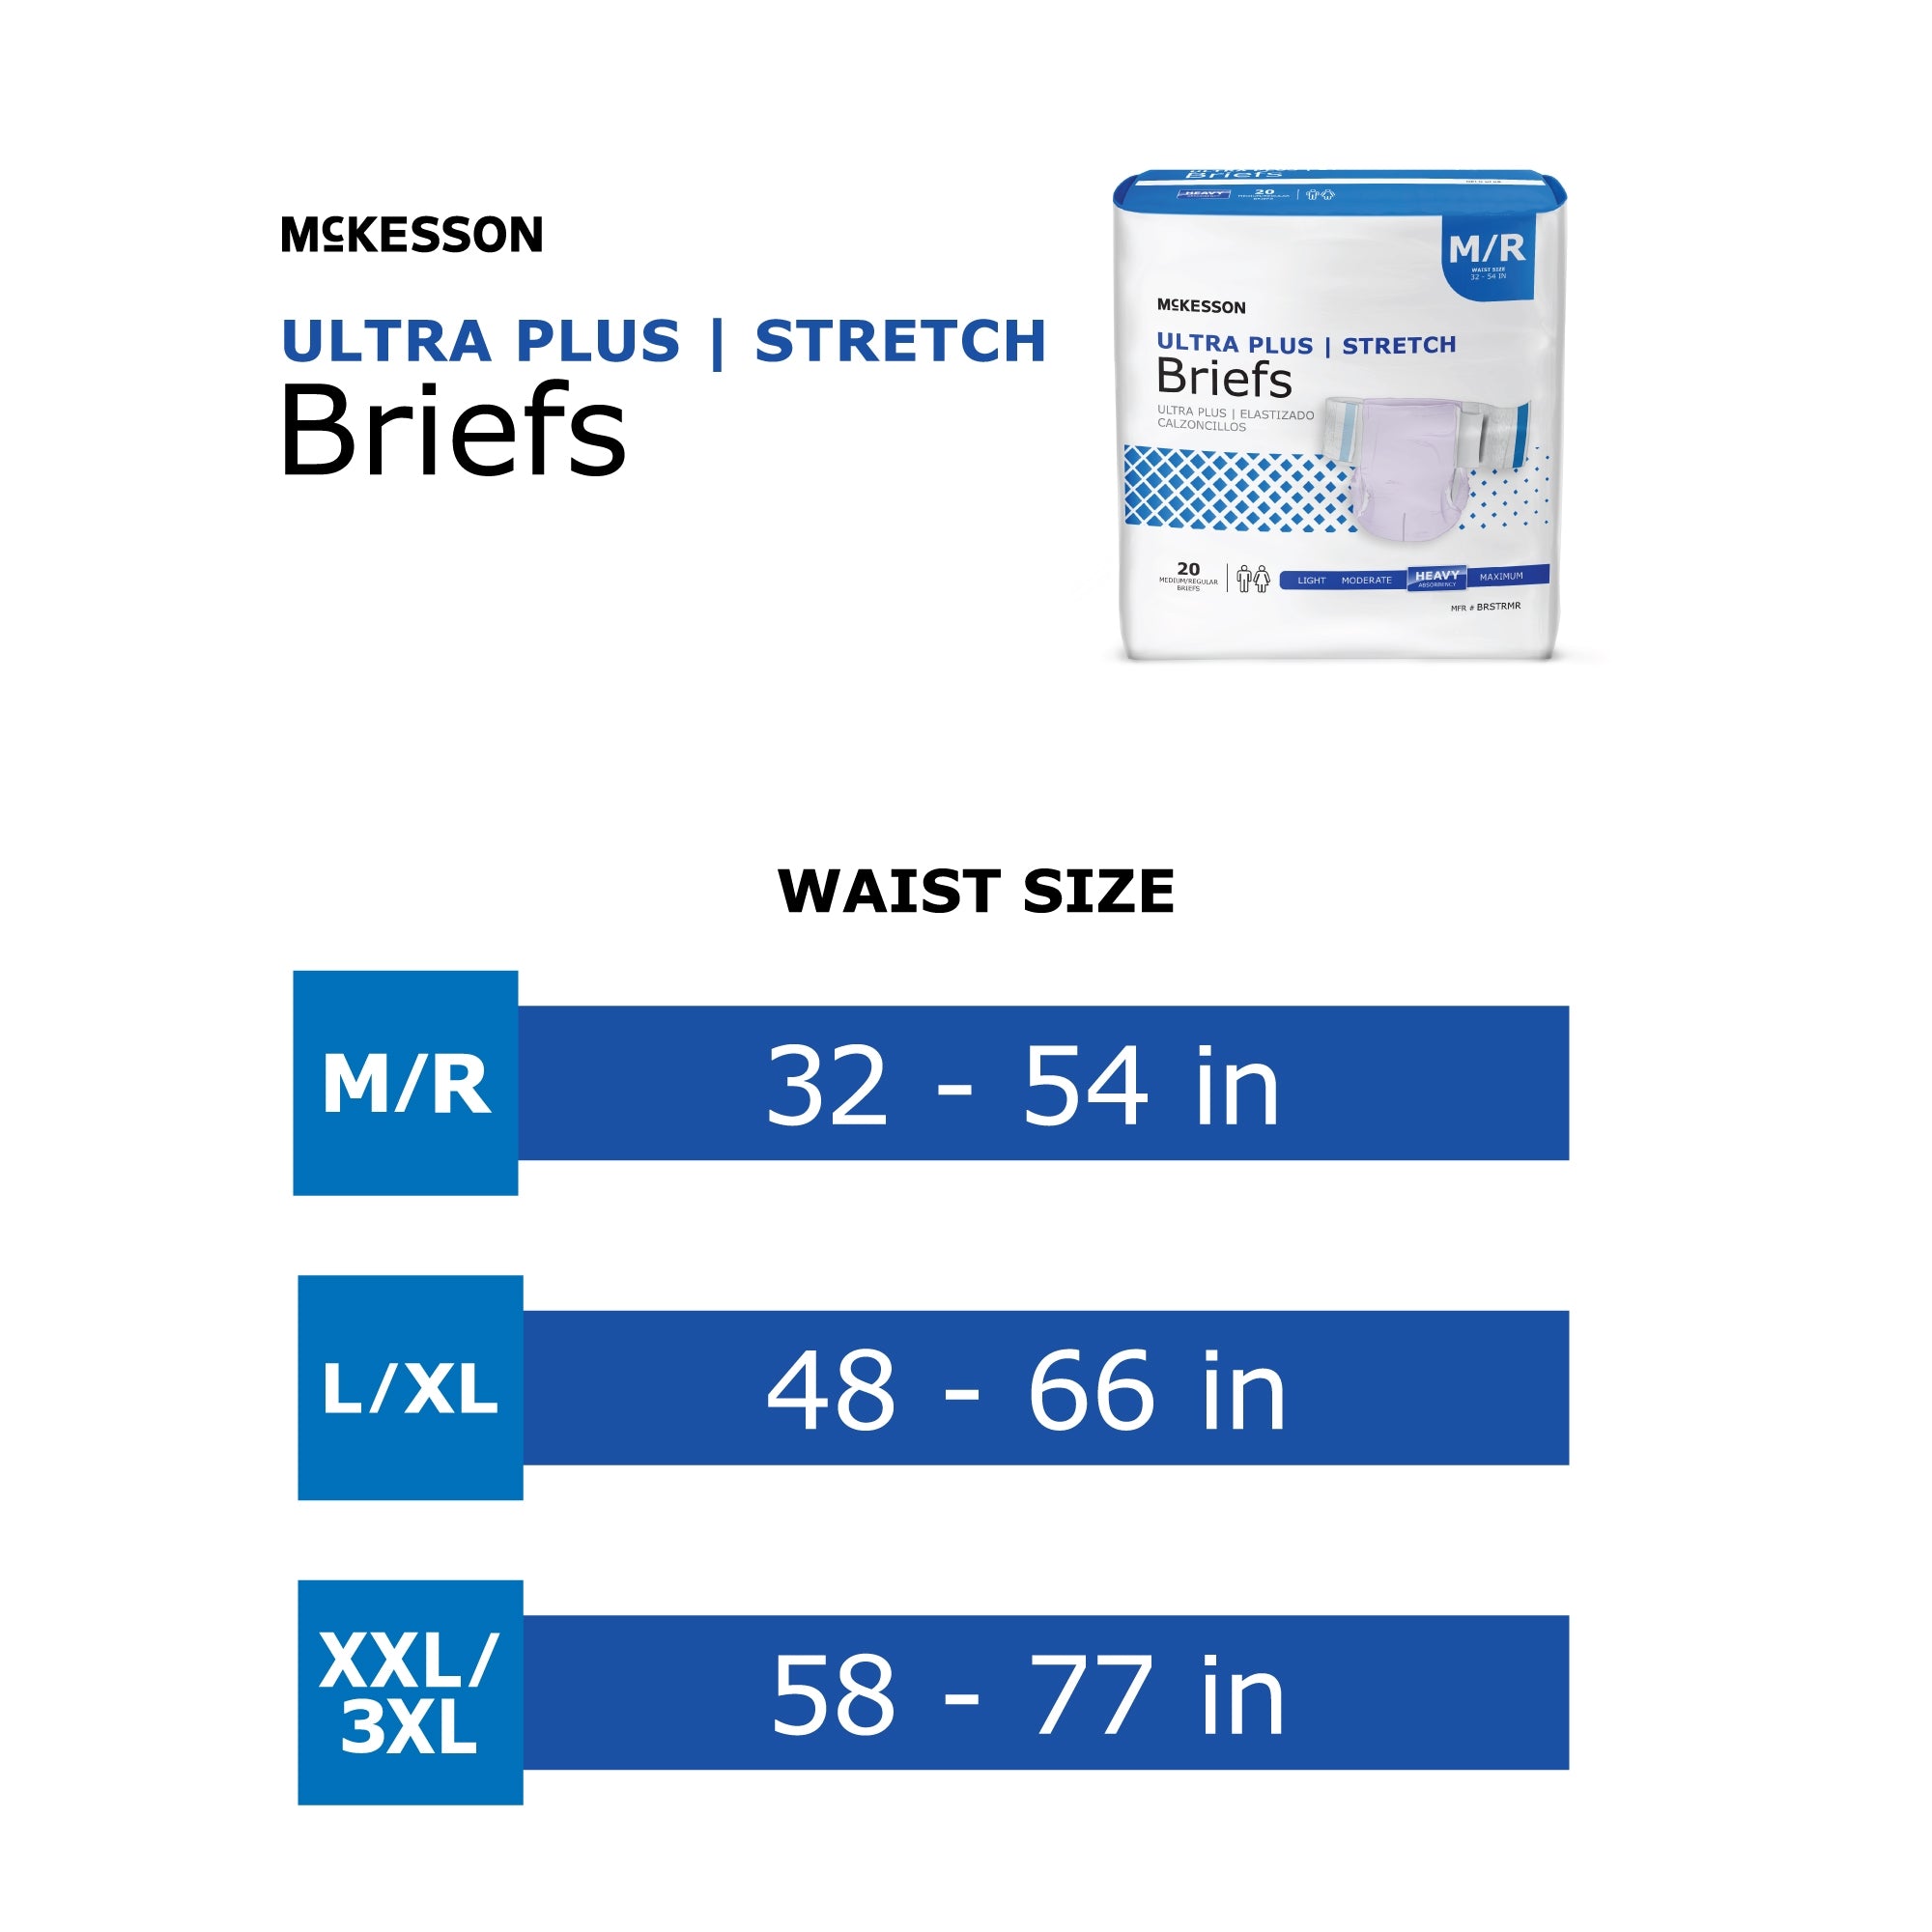 McKesson Ultra Plus Stretch Bariatric Briefs, 2XL/3XL, 20 Pack – Heavy Absorbency